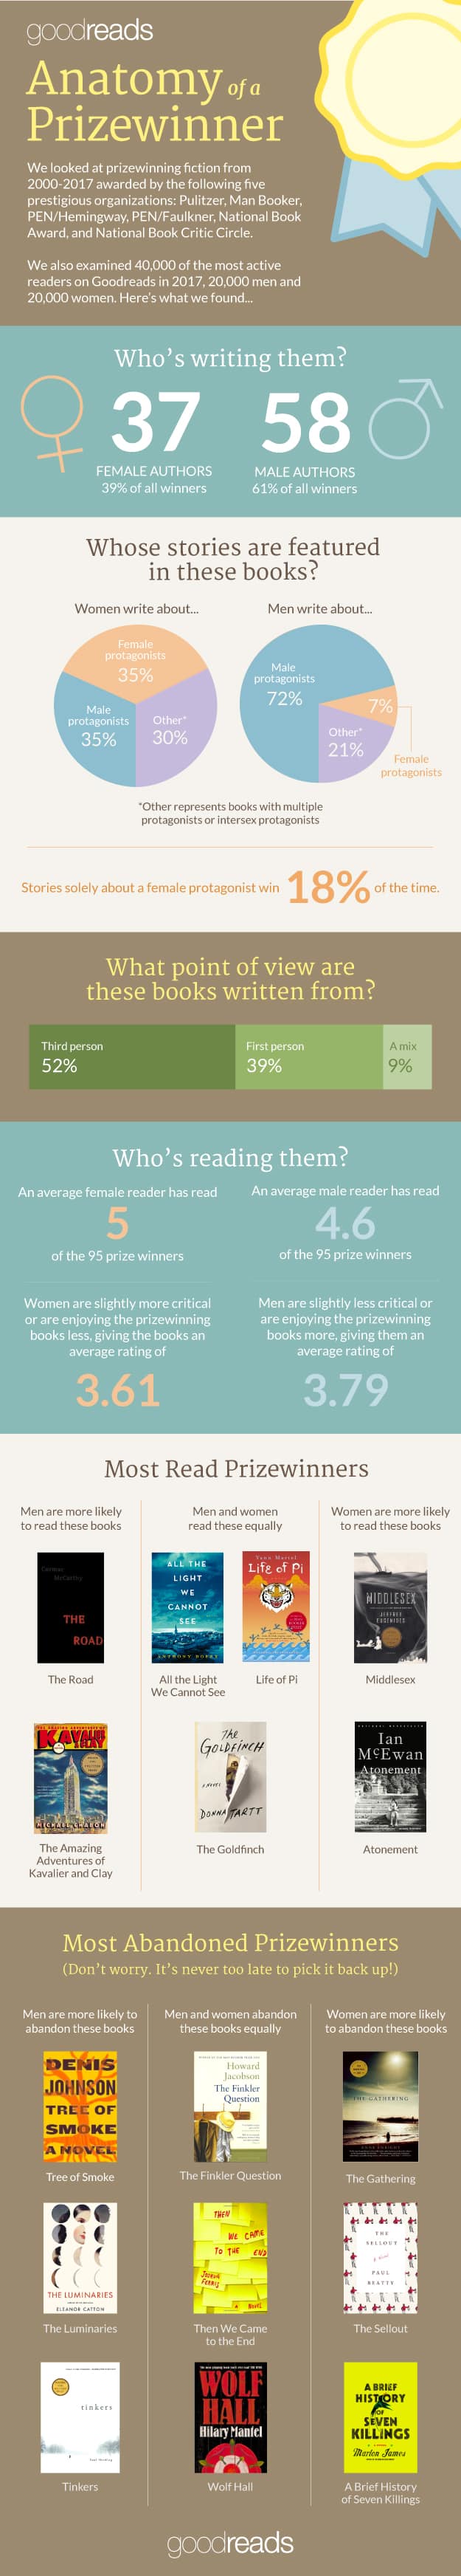 goodreads infographic